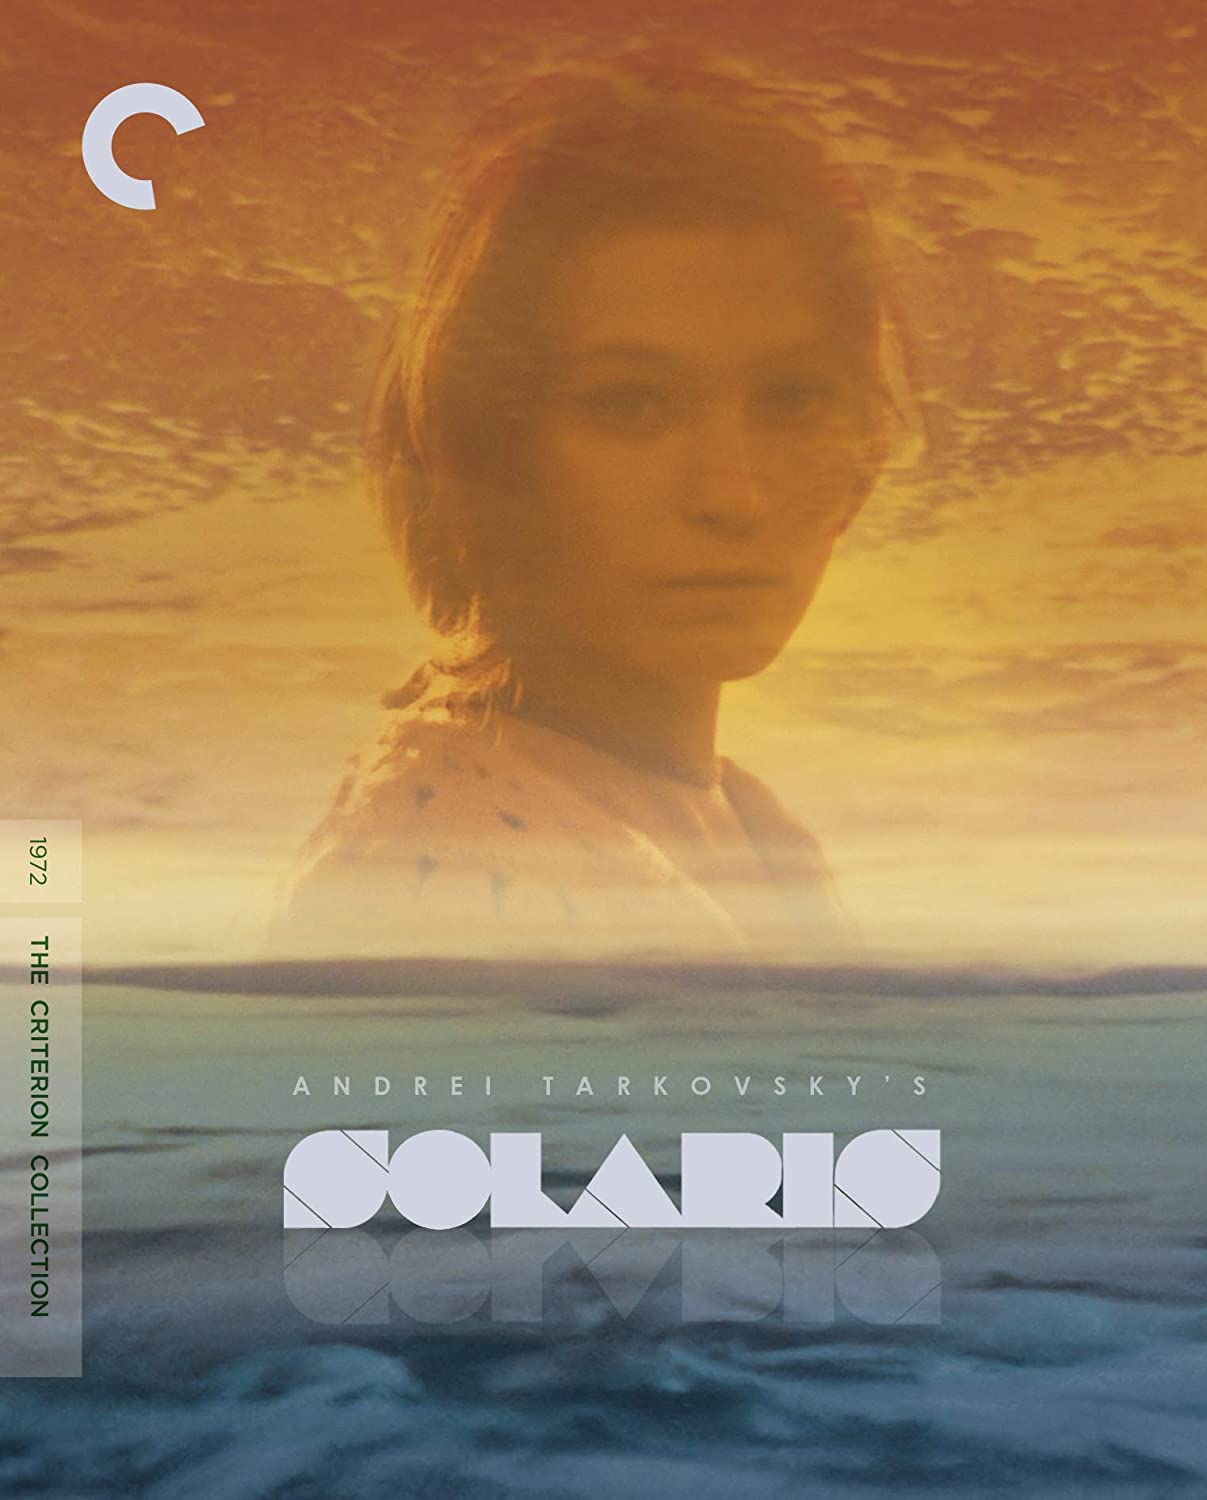 Solaris.jpg